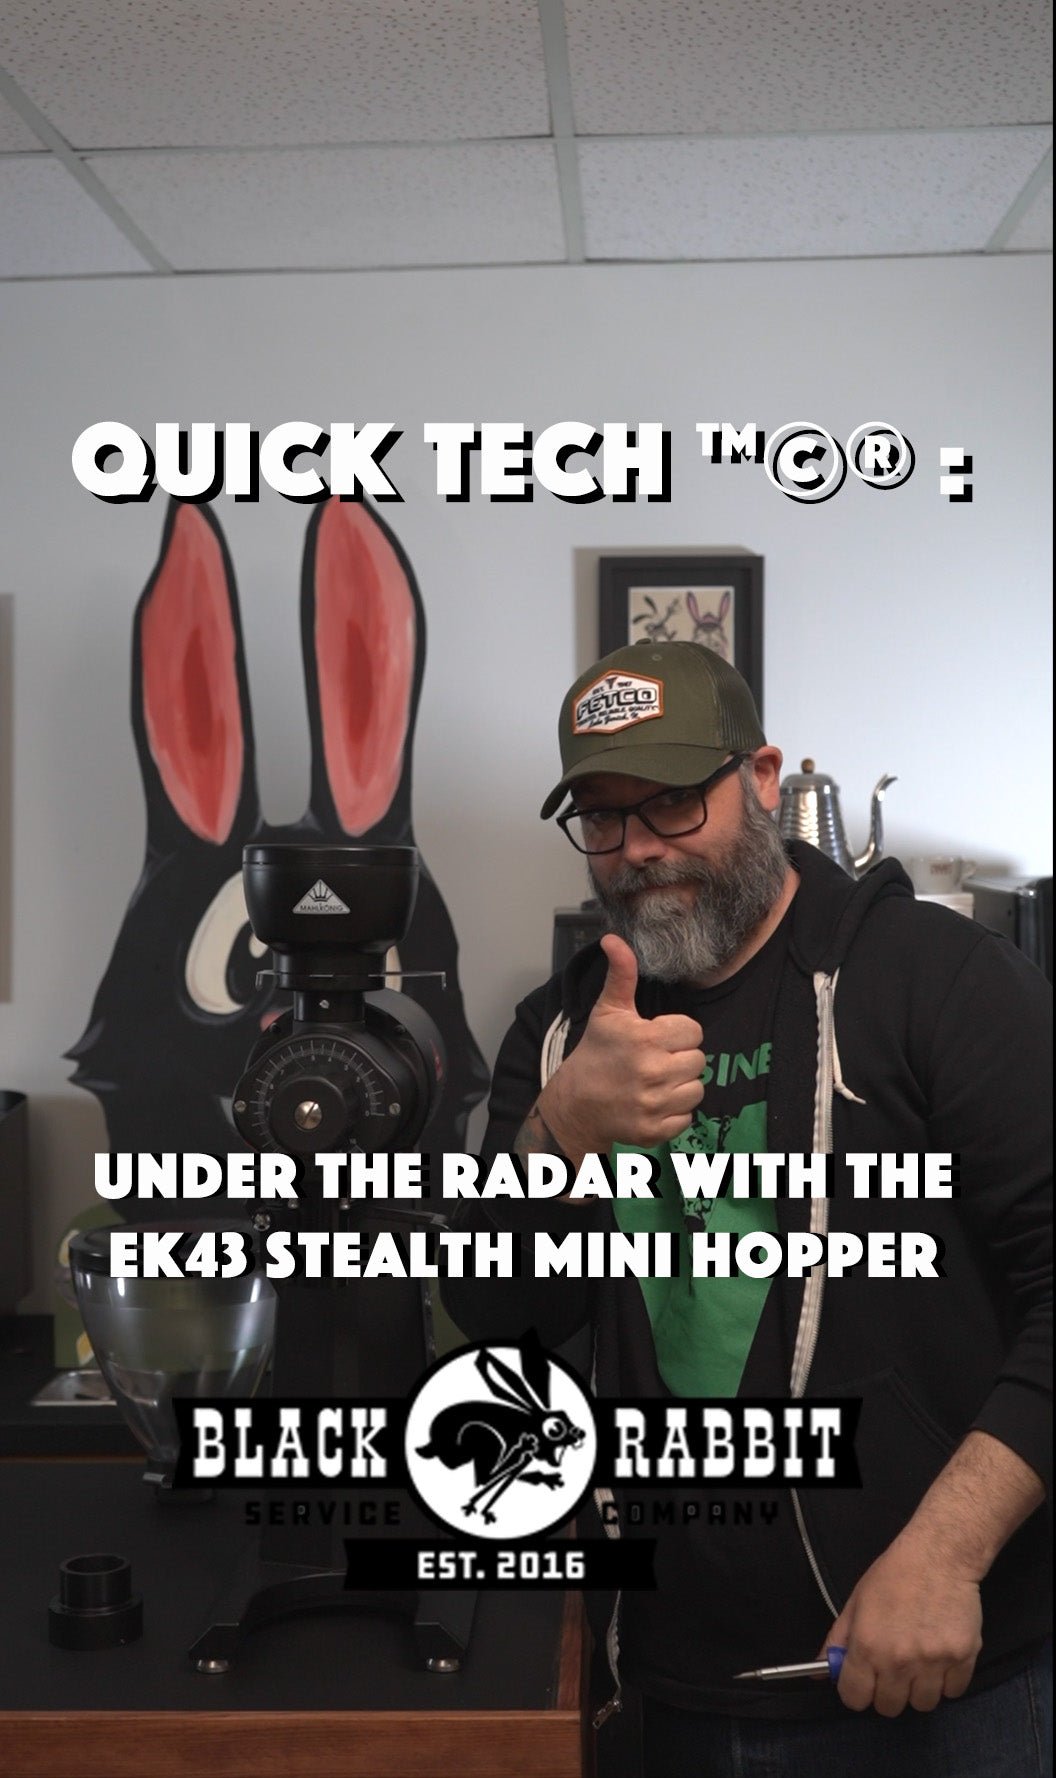 Quick Tech ™©® : Under The Radar With The EK43 Stealth Mini Hopper - Black Rabbit Service Co.